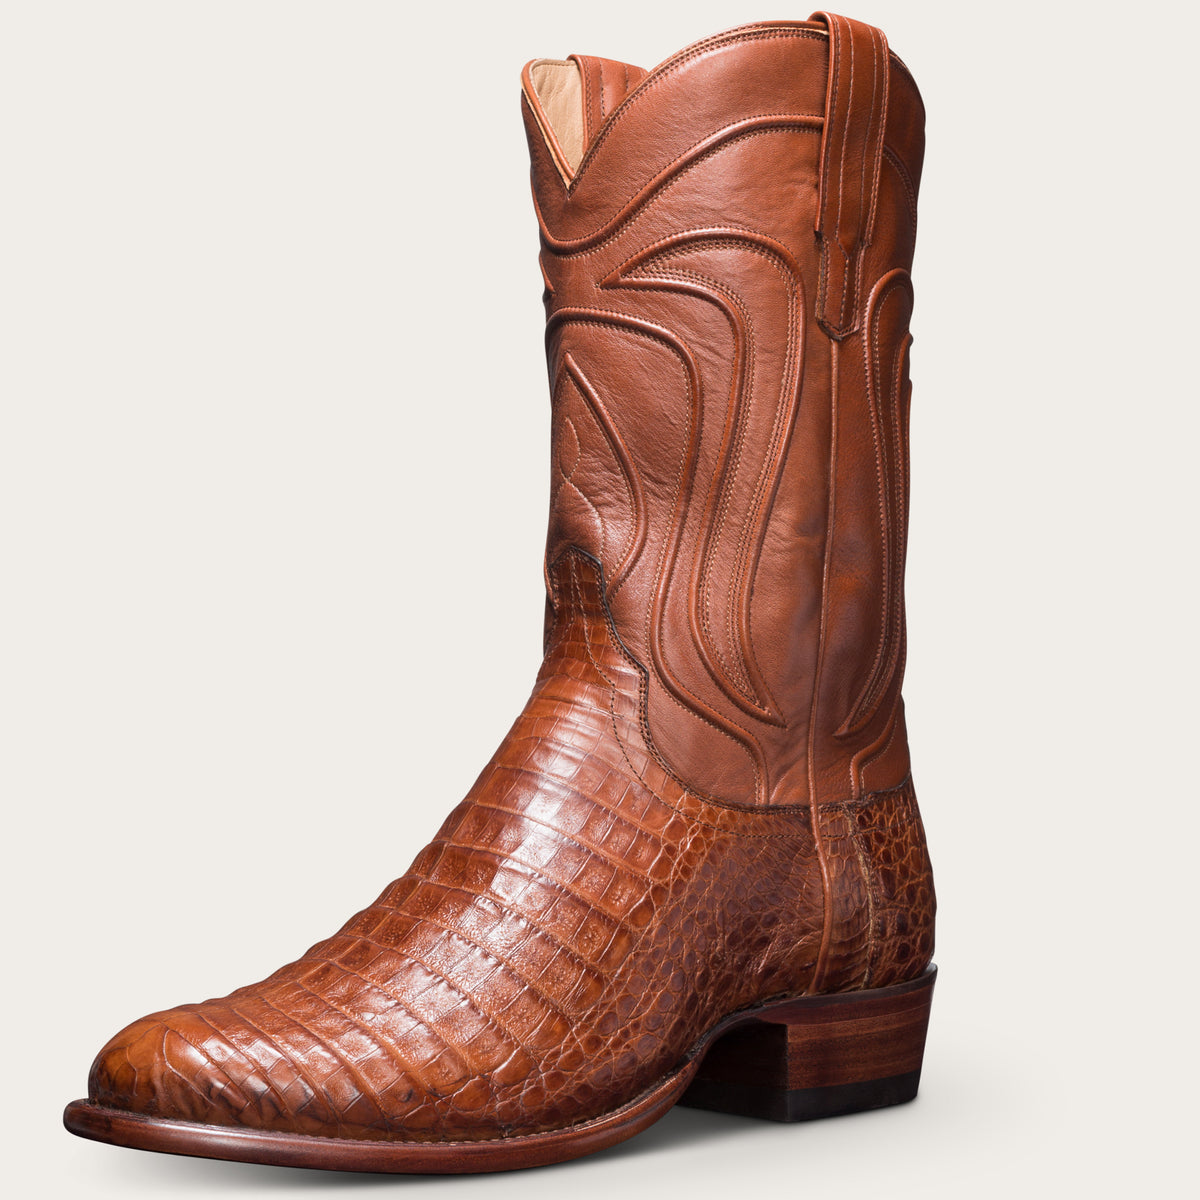 Men's Caiman Belly Cowboy Boots 